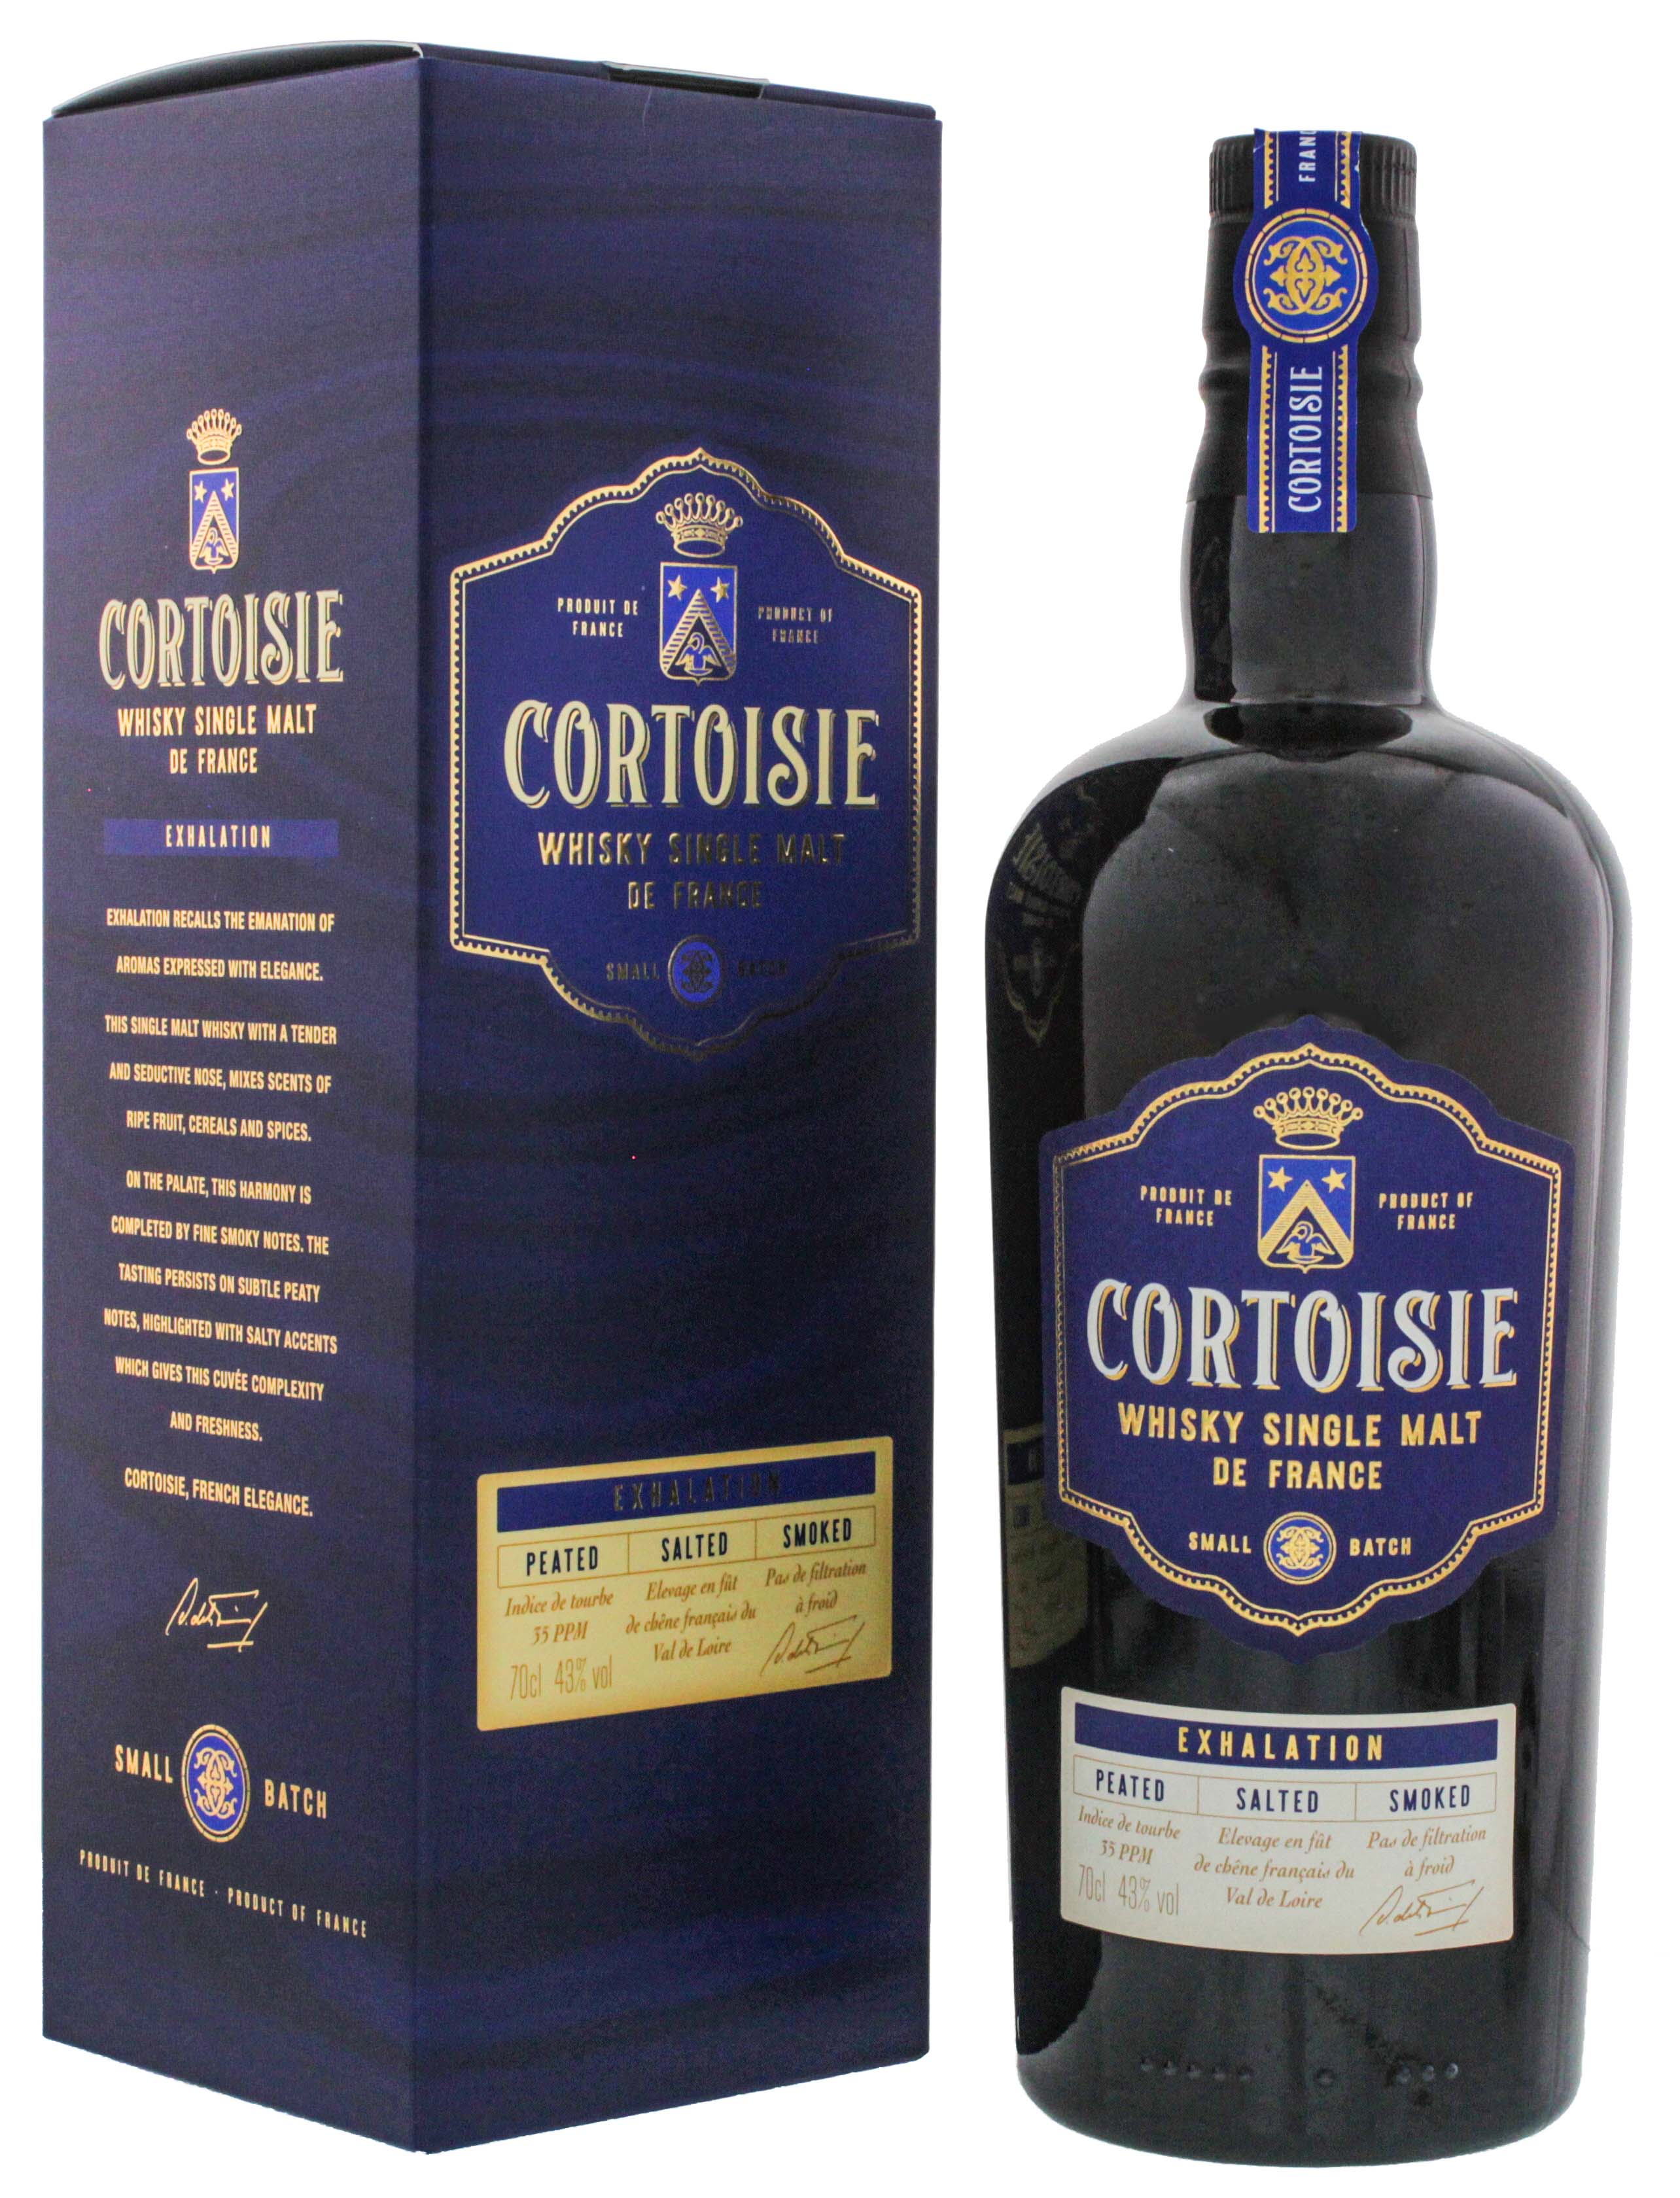 Cortoisie Whisky Single Malt de France 0,7L